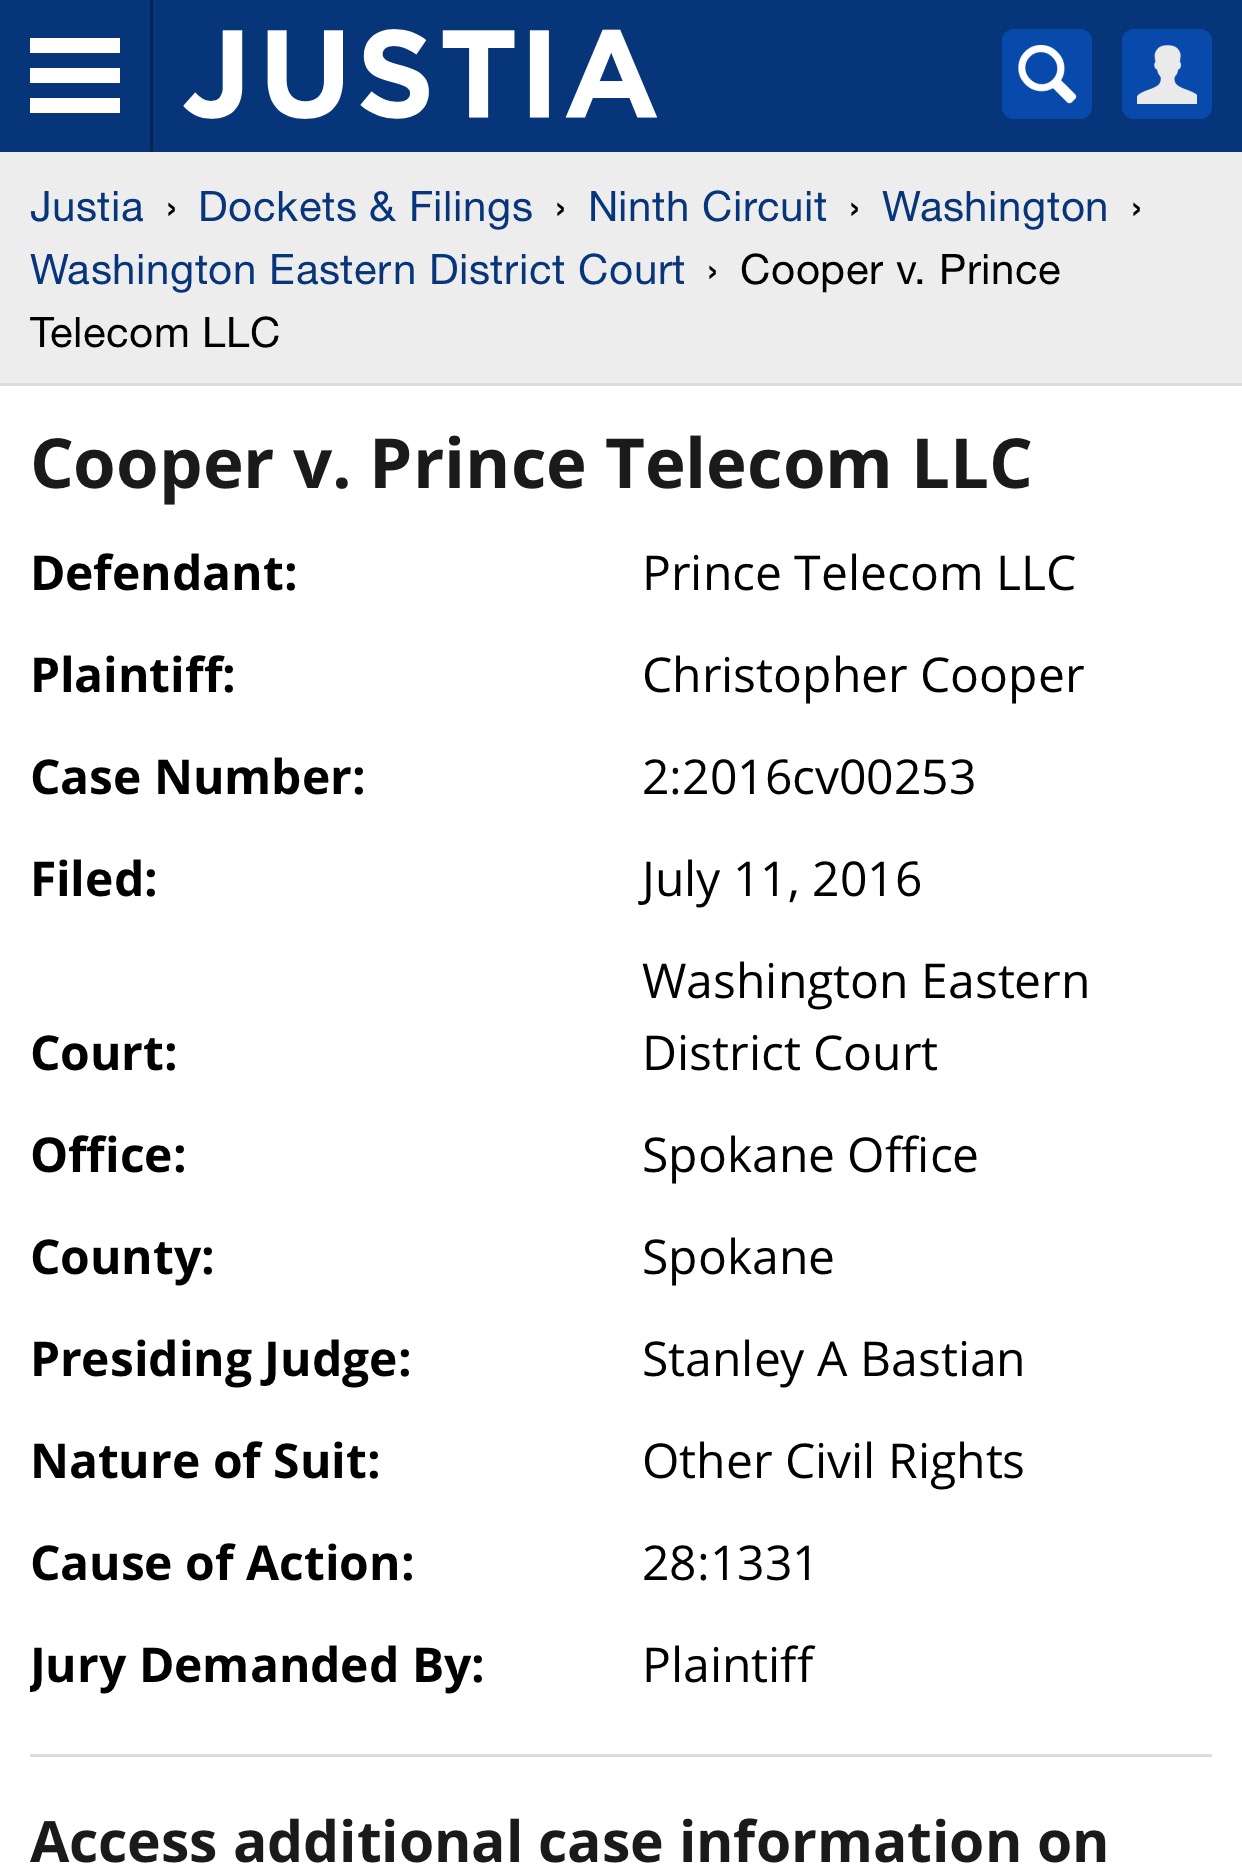 Cooper V Prince Telecom civil Rights lawsuit http://crottyandson.com/wp-content/uploads/2016/07/ECF-001-Complaint.pdf